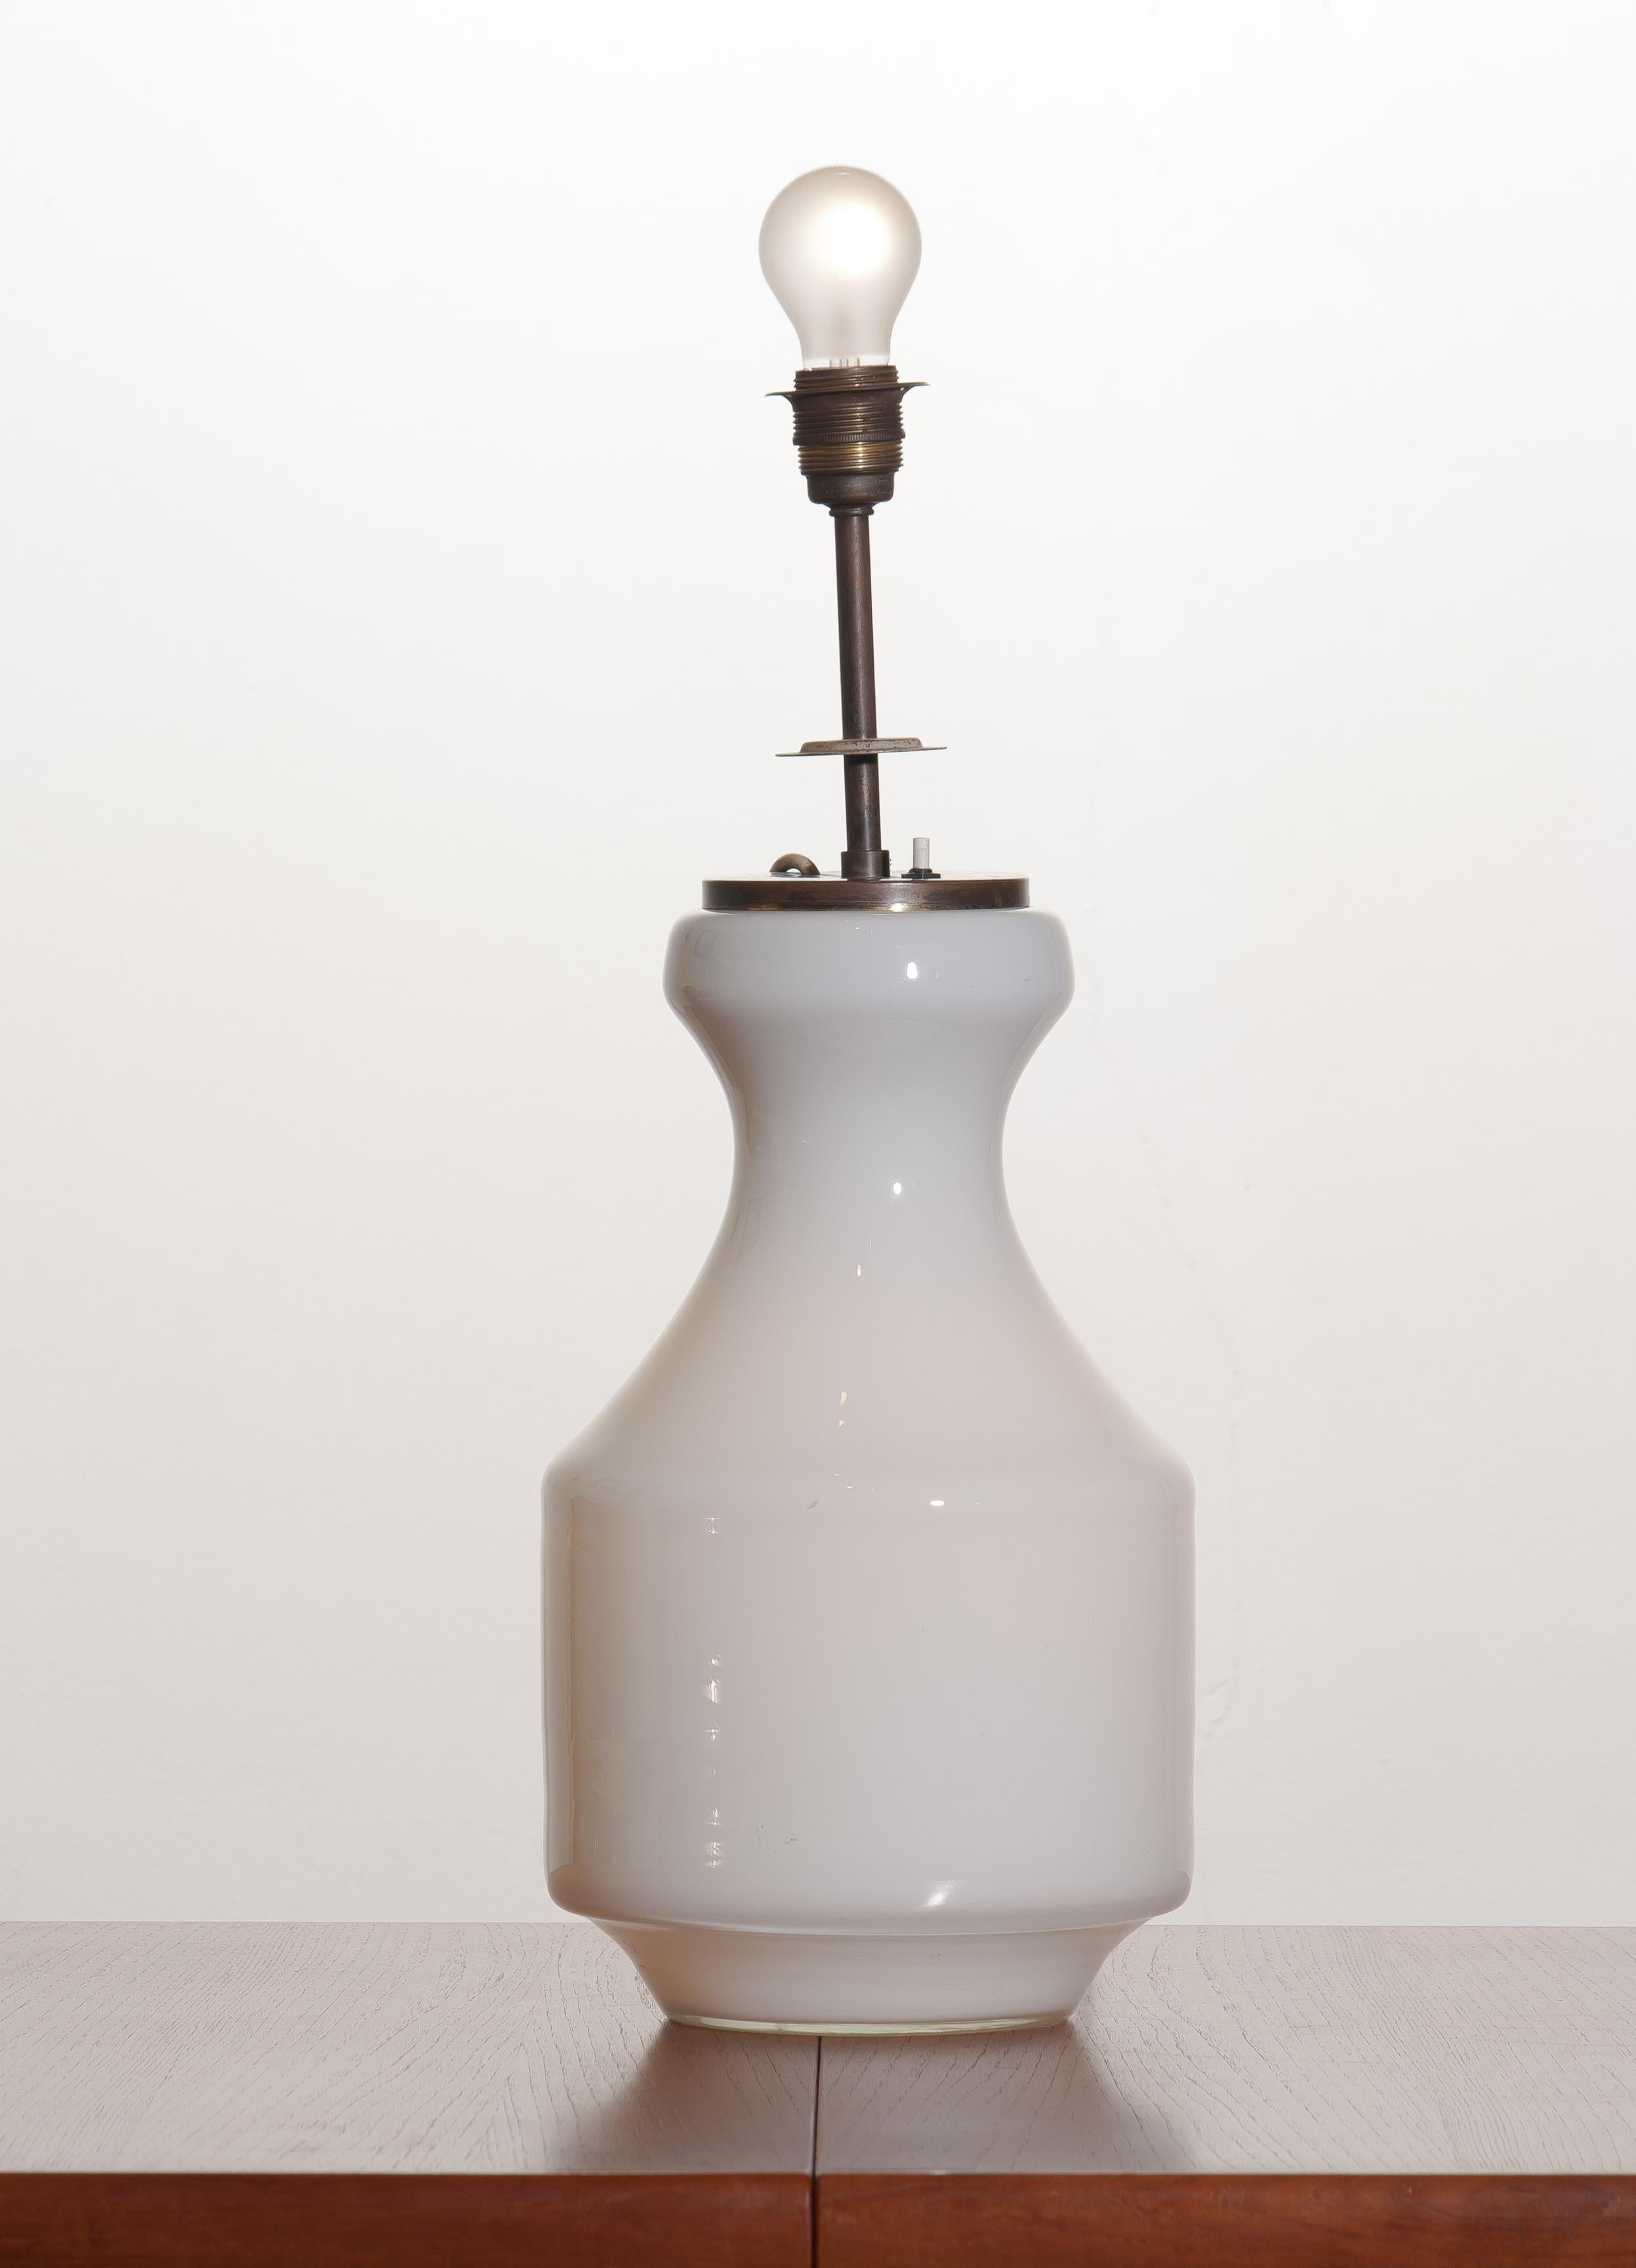 Italian 1950s, White Glass Vase Table or Floor Lamp with Internal Lighting by Murano